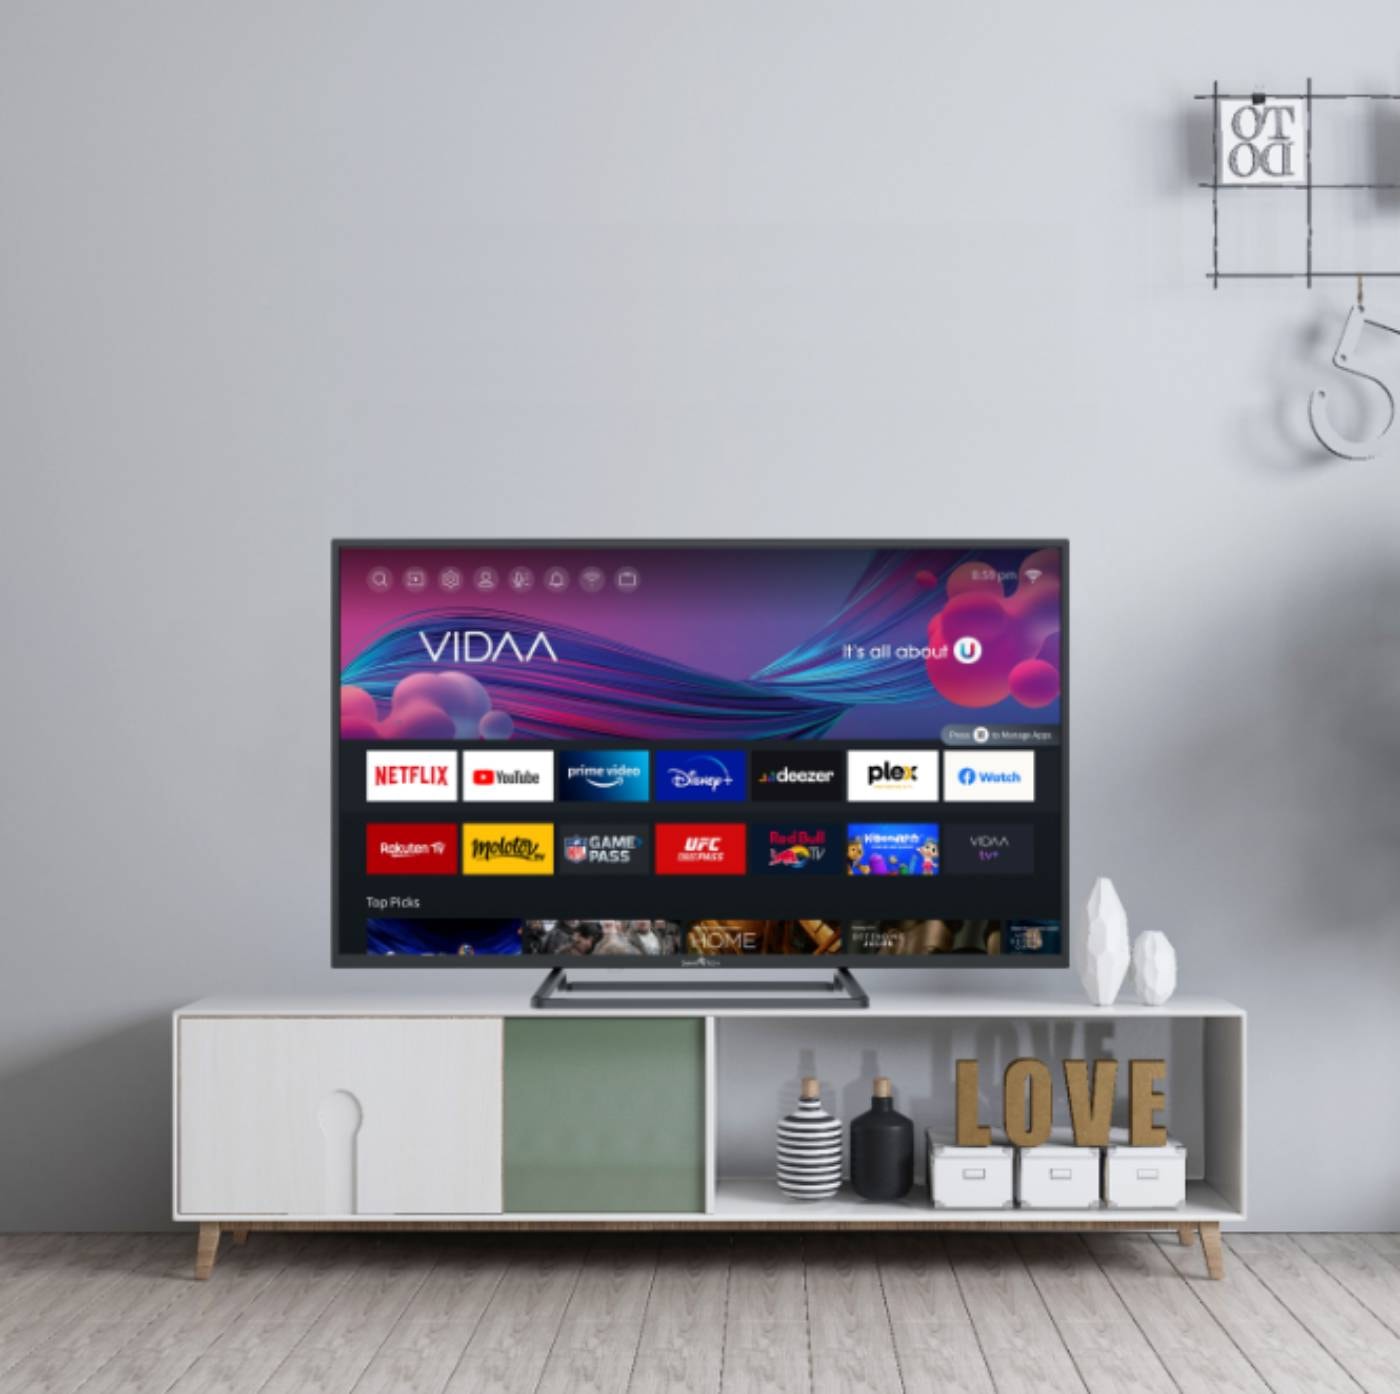 SMART TECH TV LED Full HD 109 cm  - 43FV10T3